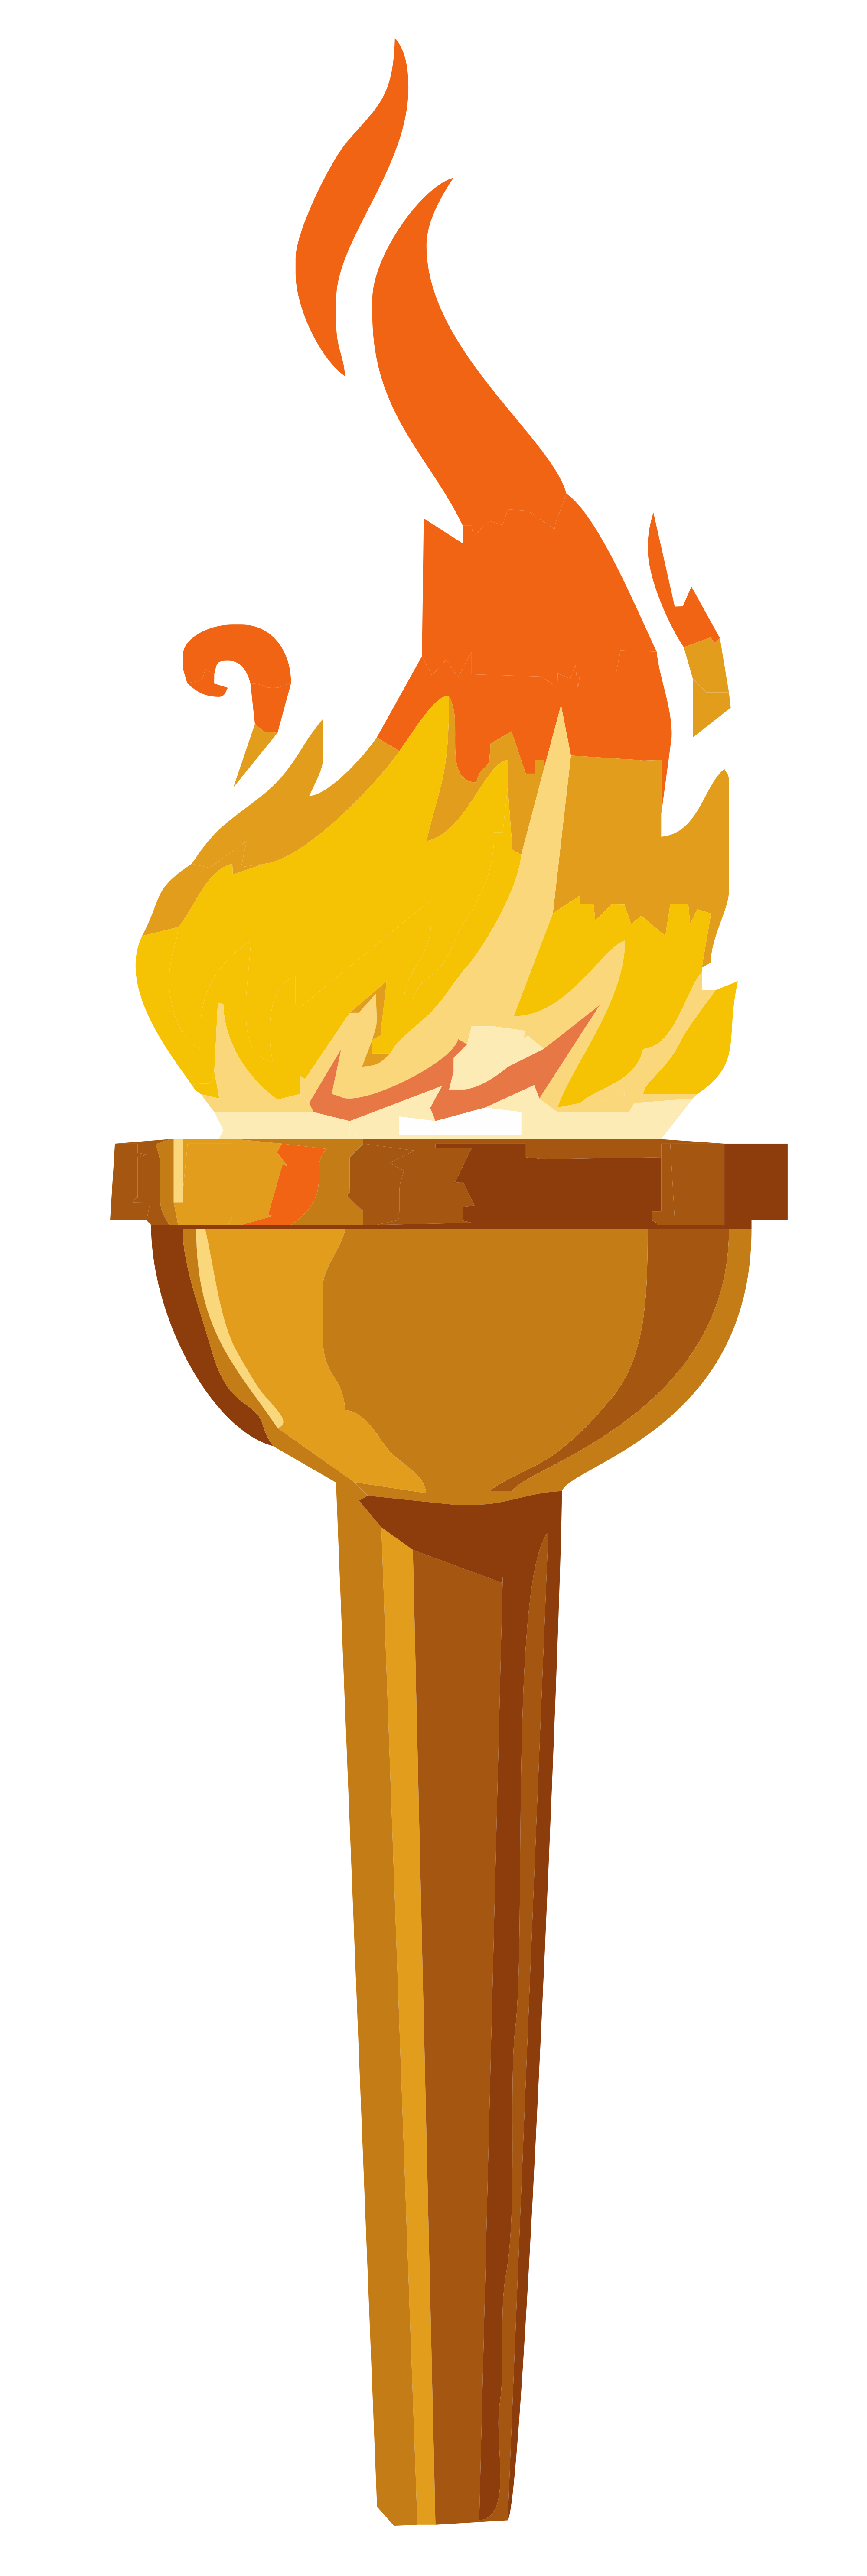 Torch | Free Download Clip Art | Free Clip Art